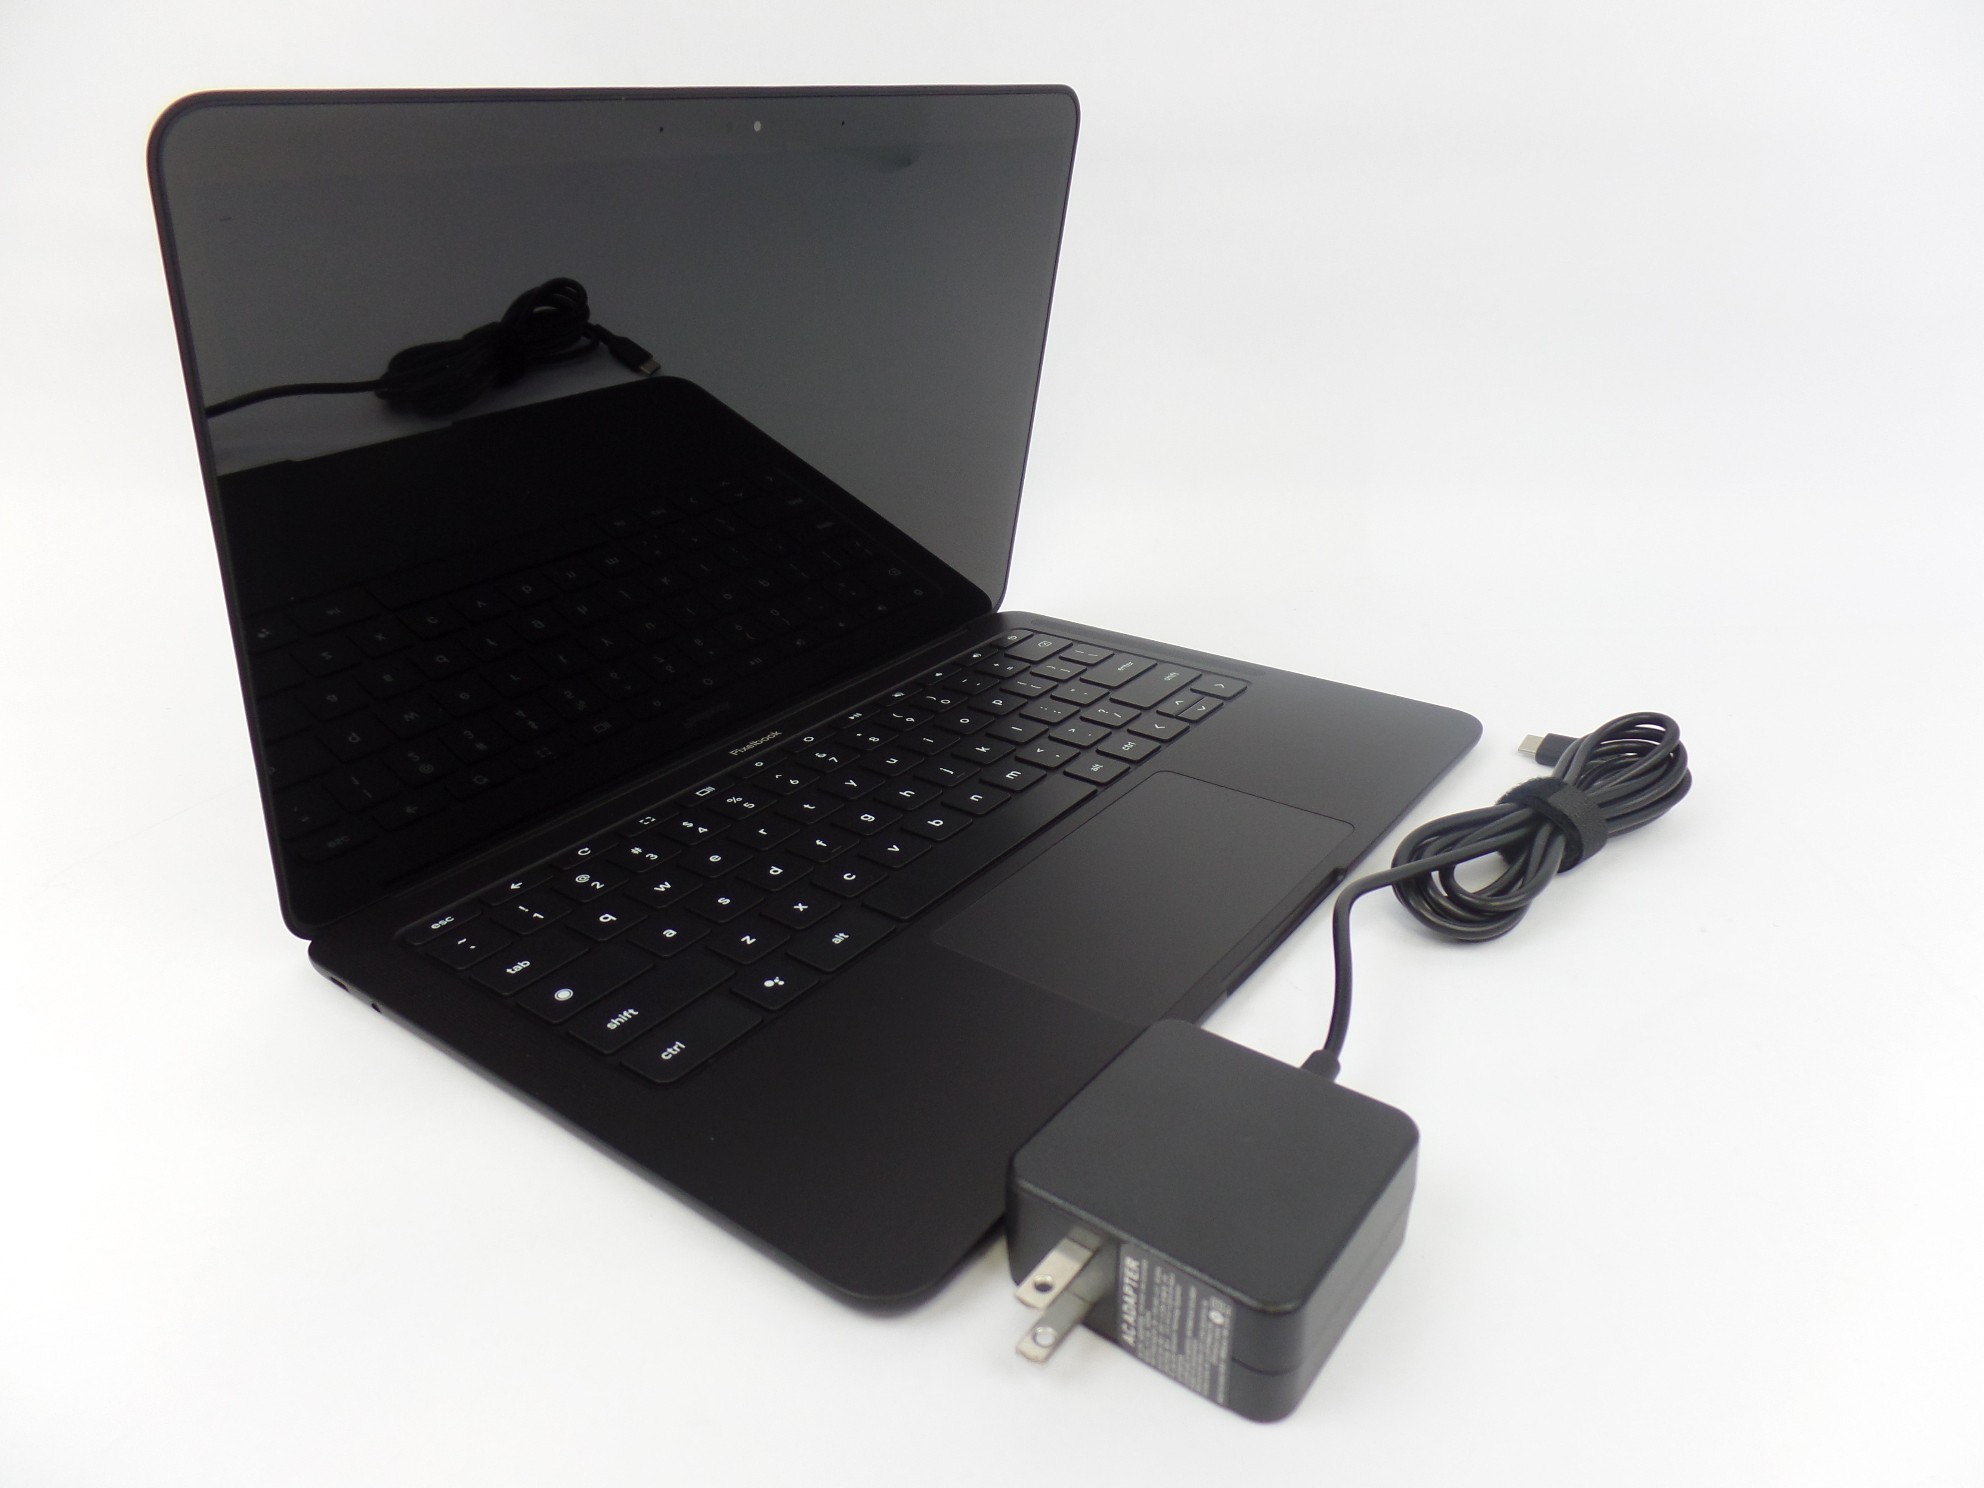 Google Pixelbook GA00521-US 13.3" FHD Touch i5-8200Y 8GB 128GB Chrome Laptop